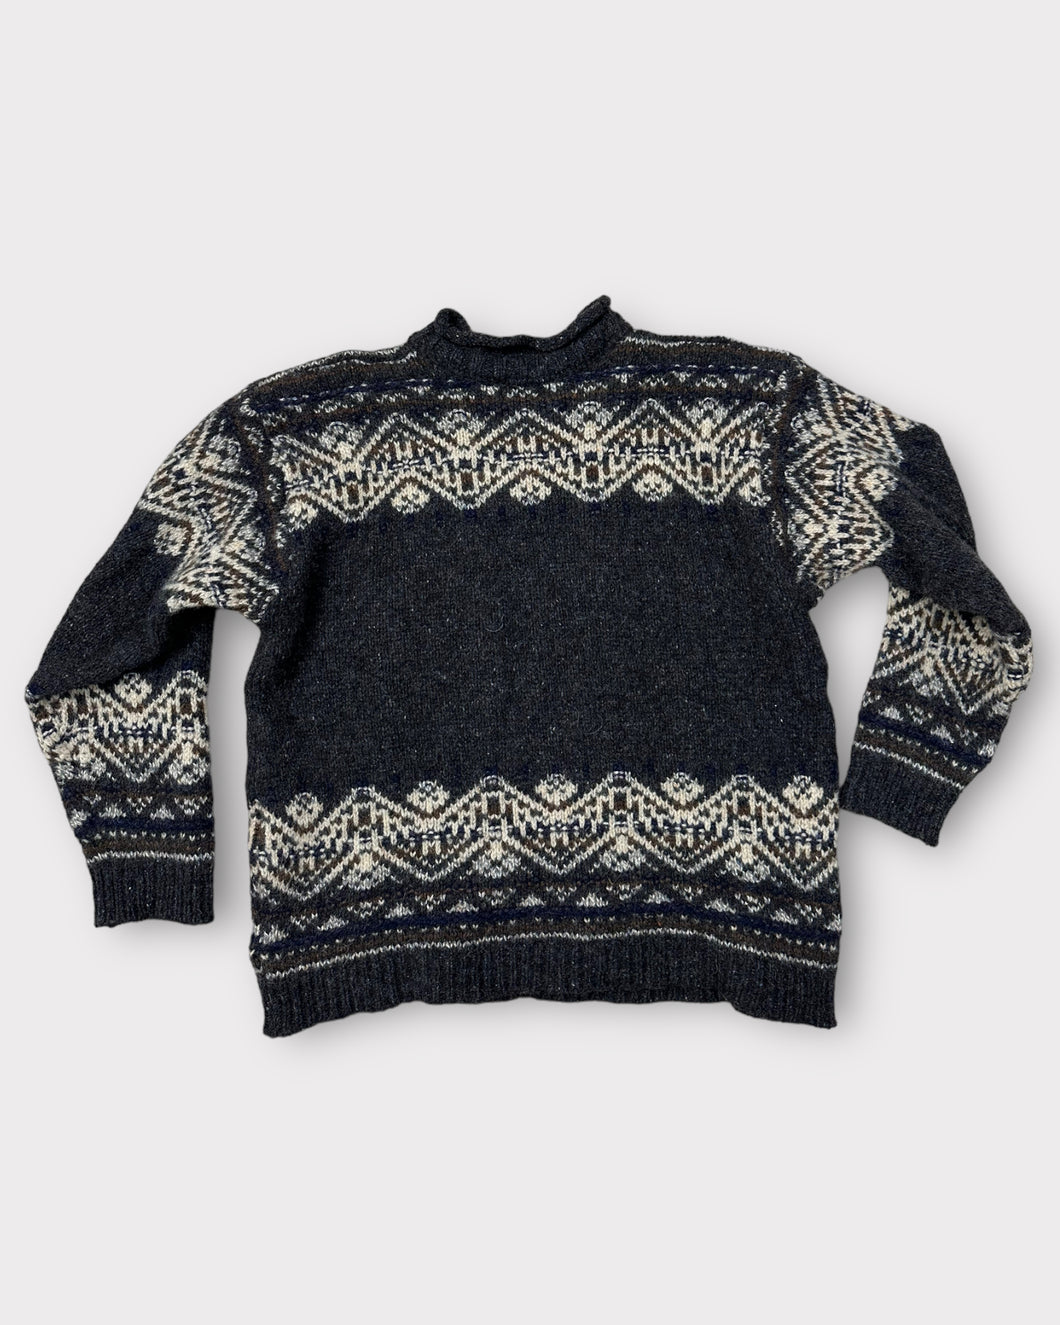 Blarney Vintage Fair Isle Mock Neck Sweater (XL)